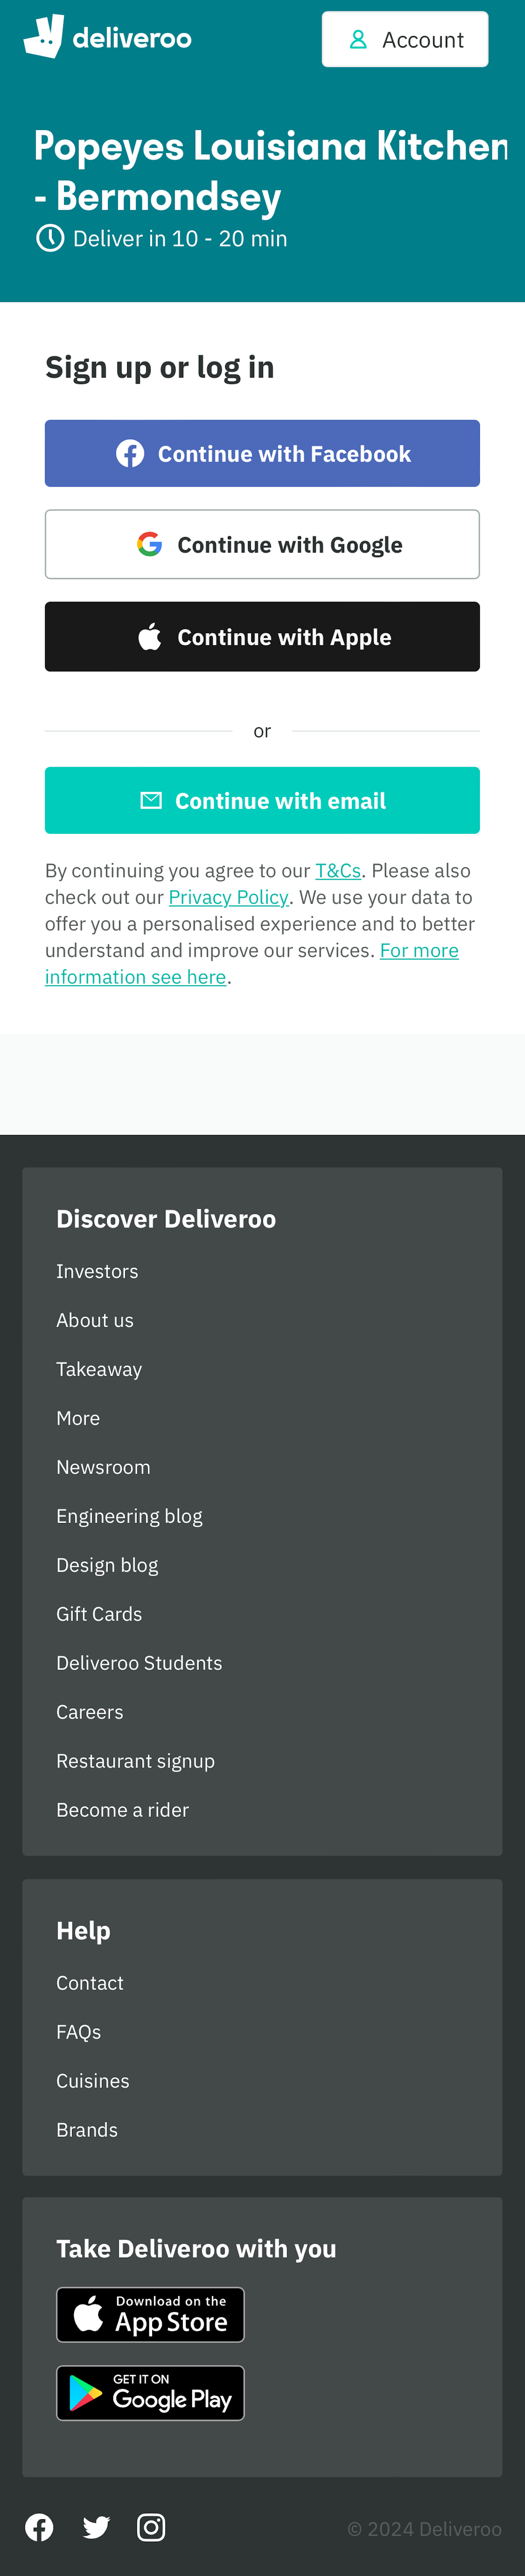 Mobile screenshot of Deliveroo